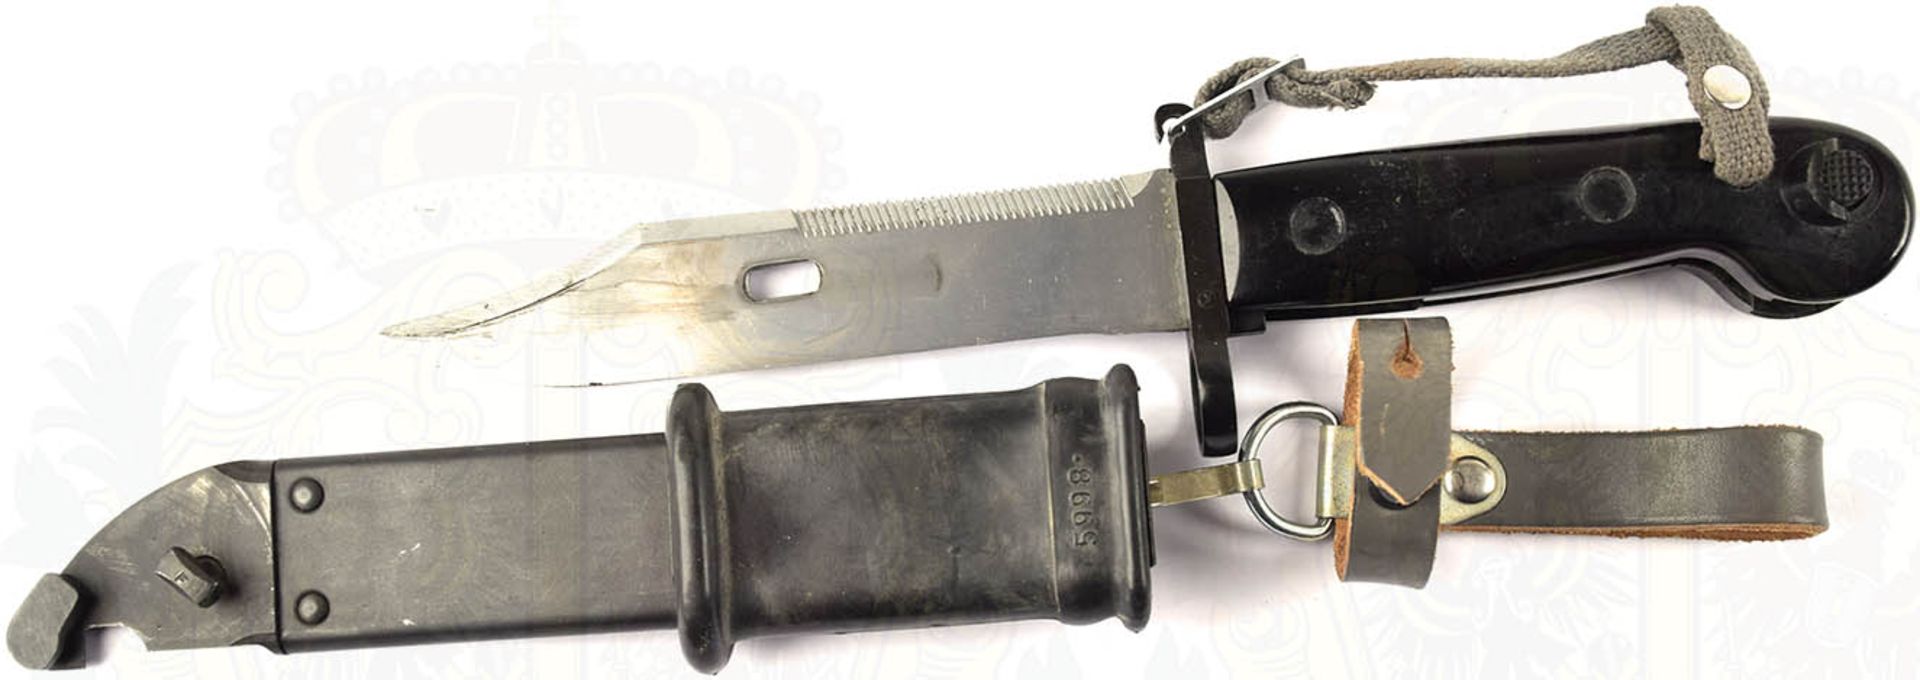 BAJONETT MOD. AK-47/59, Klinge mit Säge u. Drahtschneide-Funktion, Bakelit-Griff, schwarz